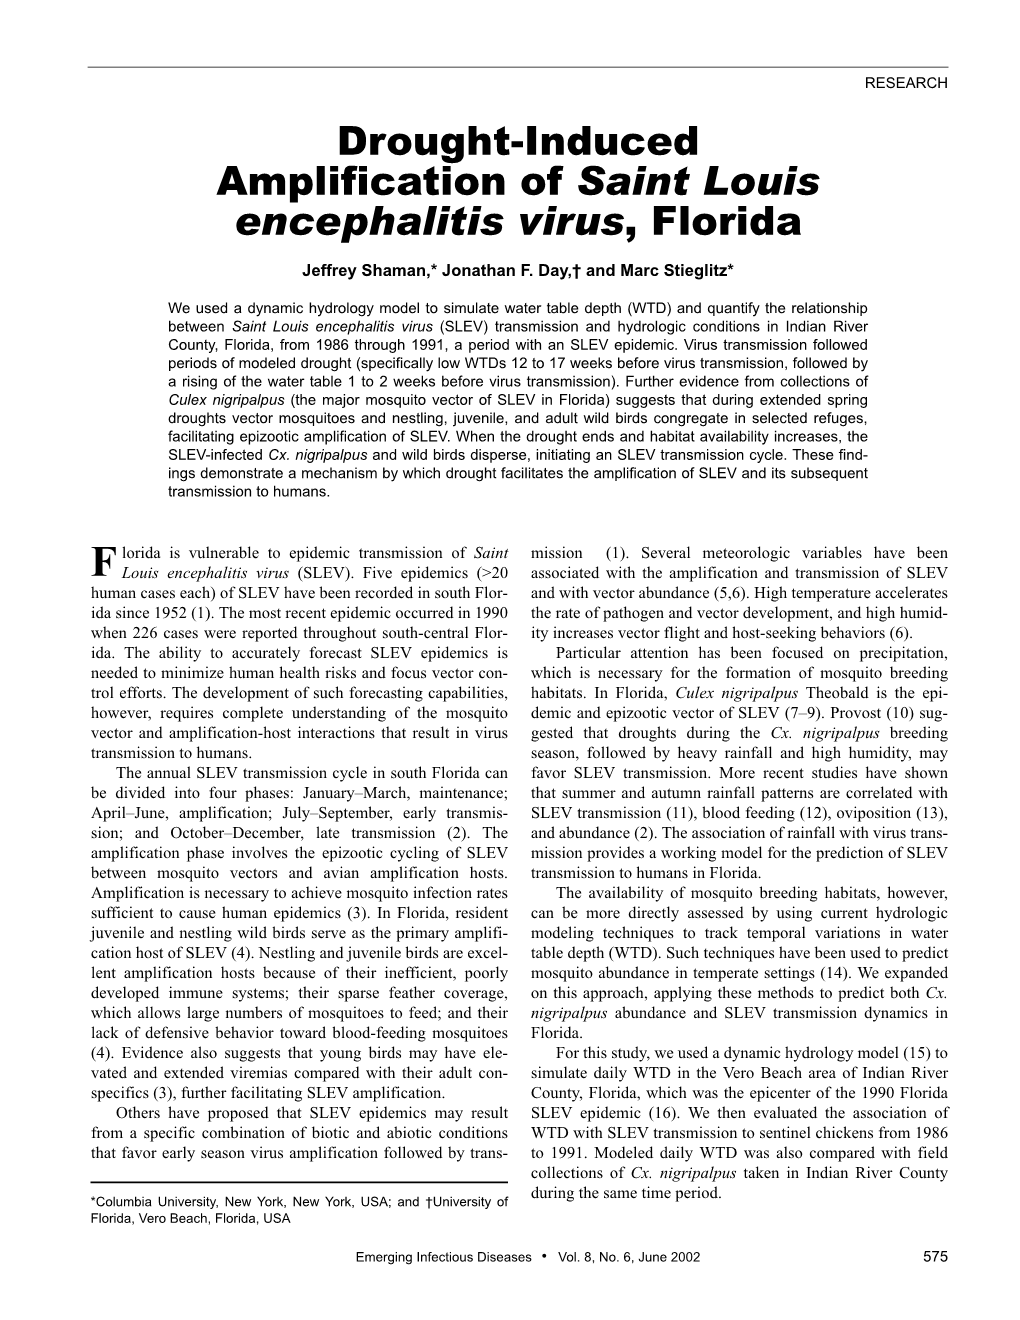 Drought-Induced Amplification of Saint Louis Encephalitis Virus, Florida Jeffrey Shaman,* Jonathan F